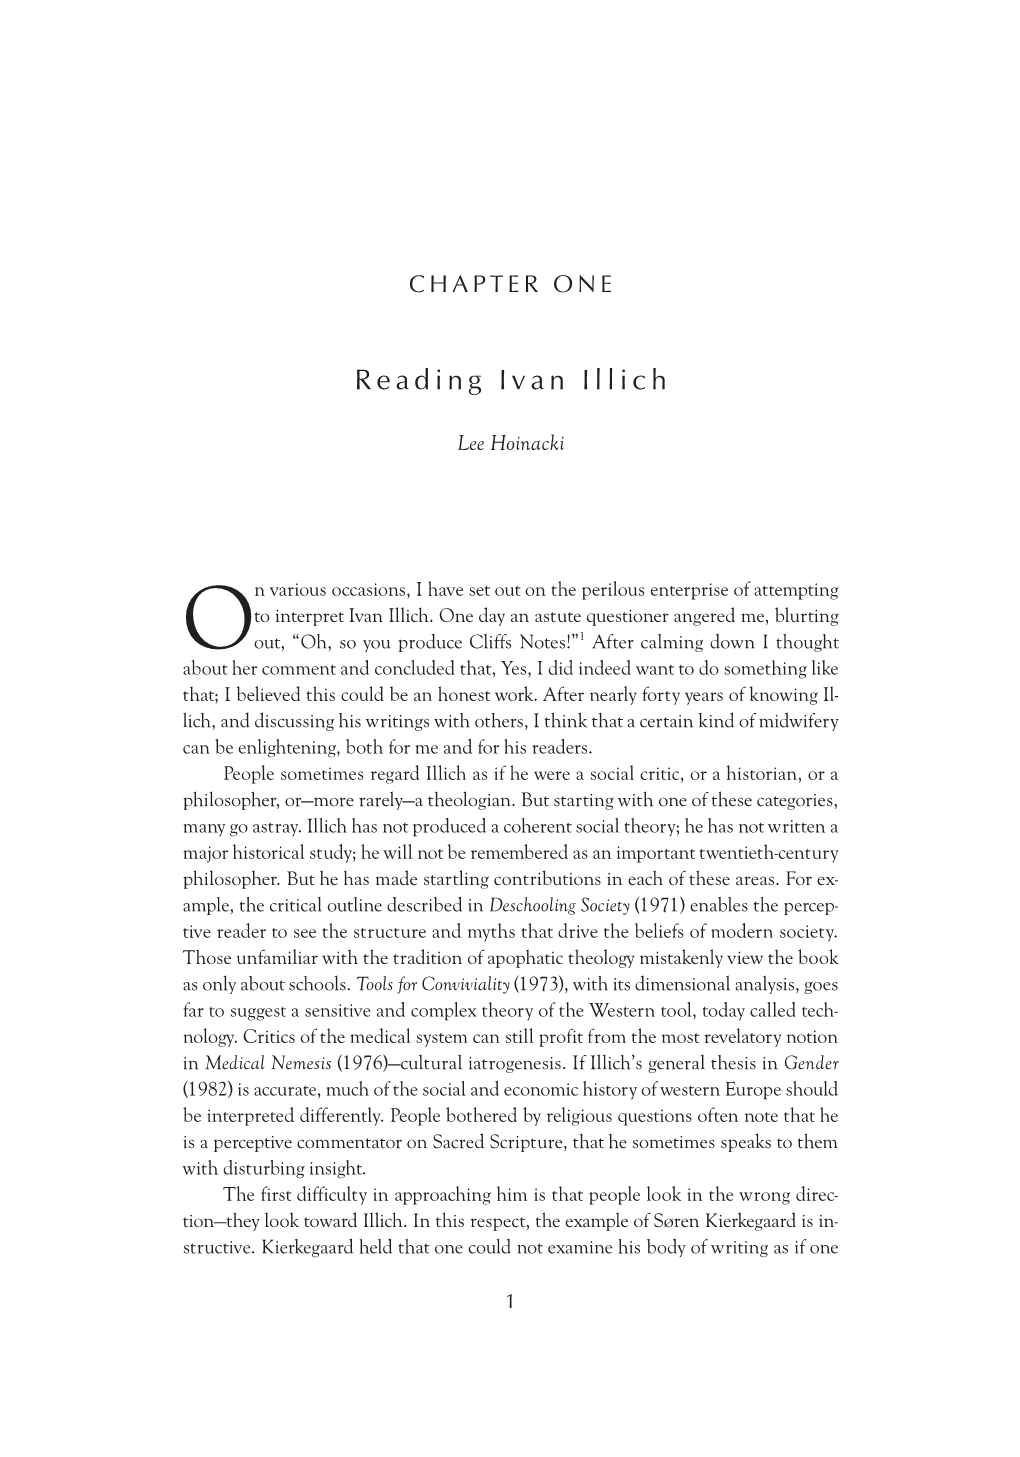 Reading Ivan Illich